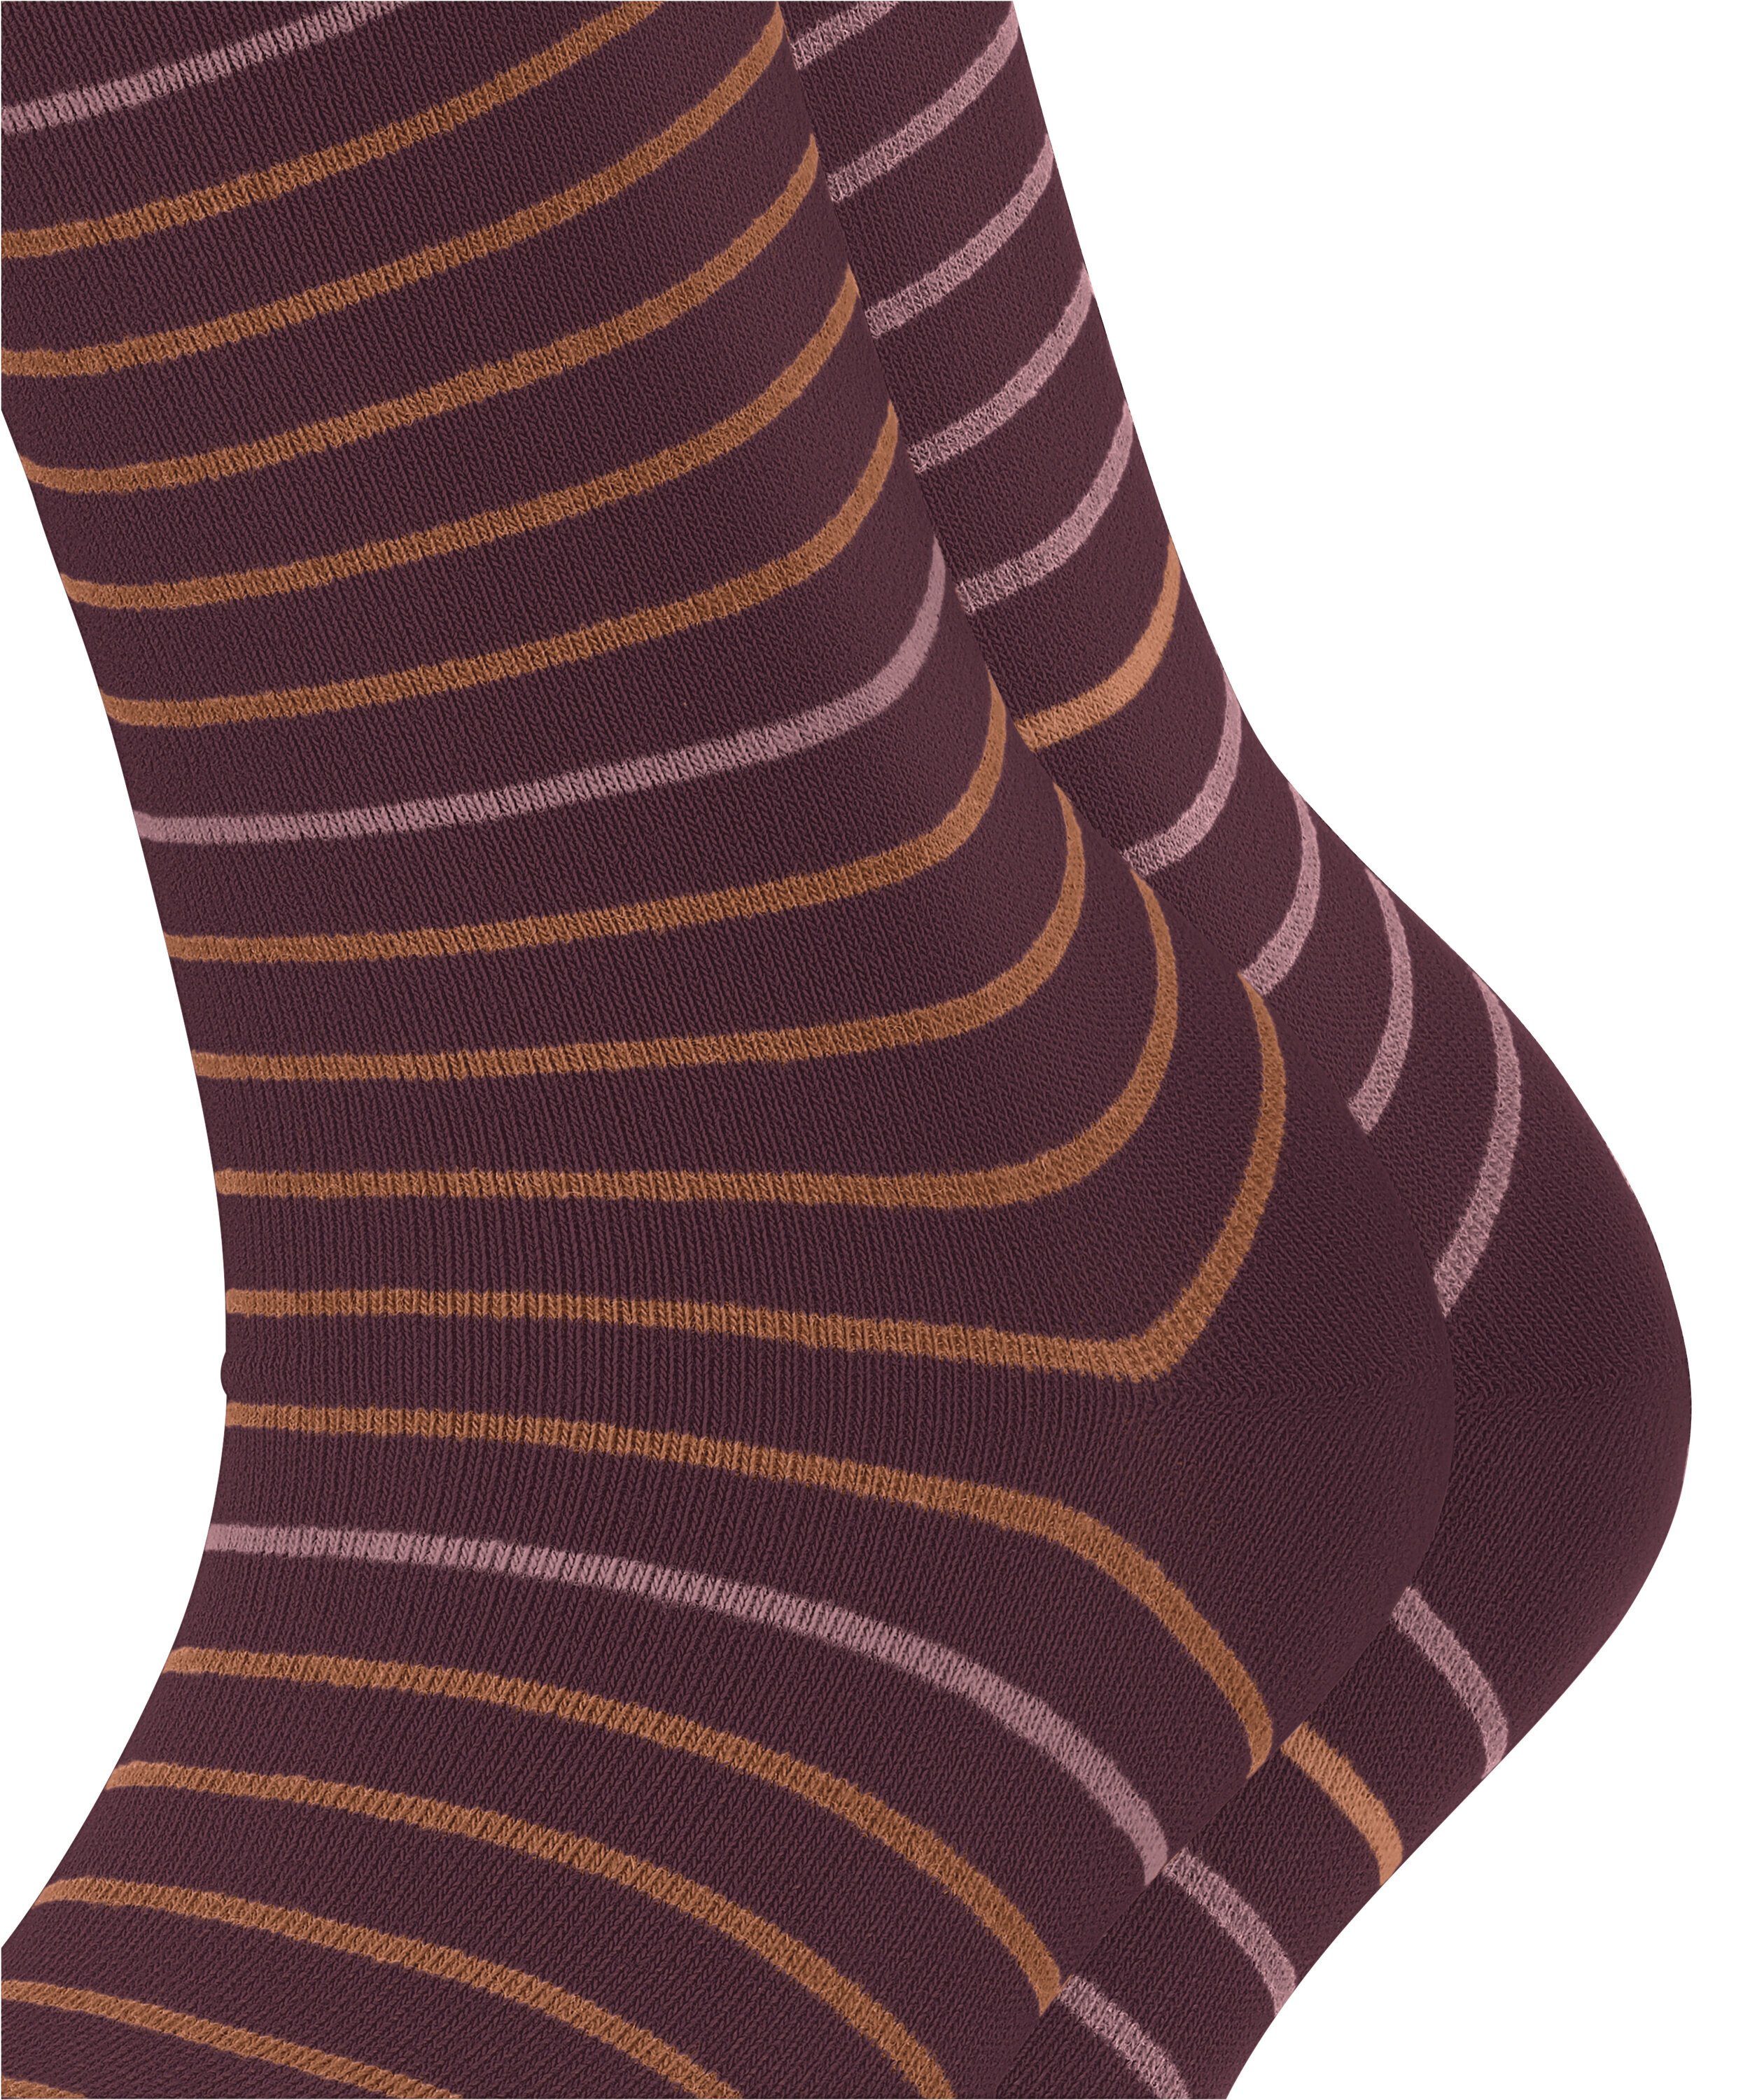 Esprit Socken Fine Stripe 2-Pack (2-Paar) (8375) claret